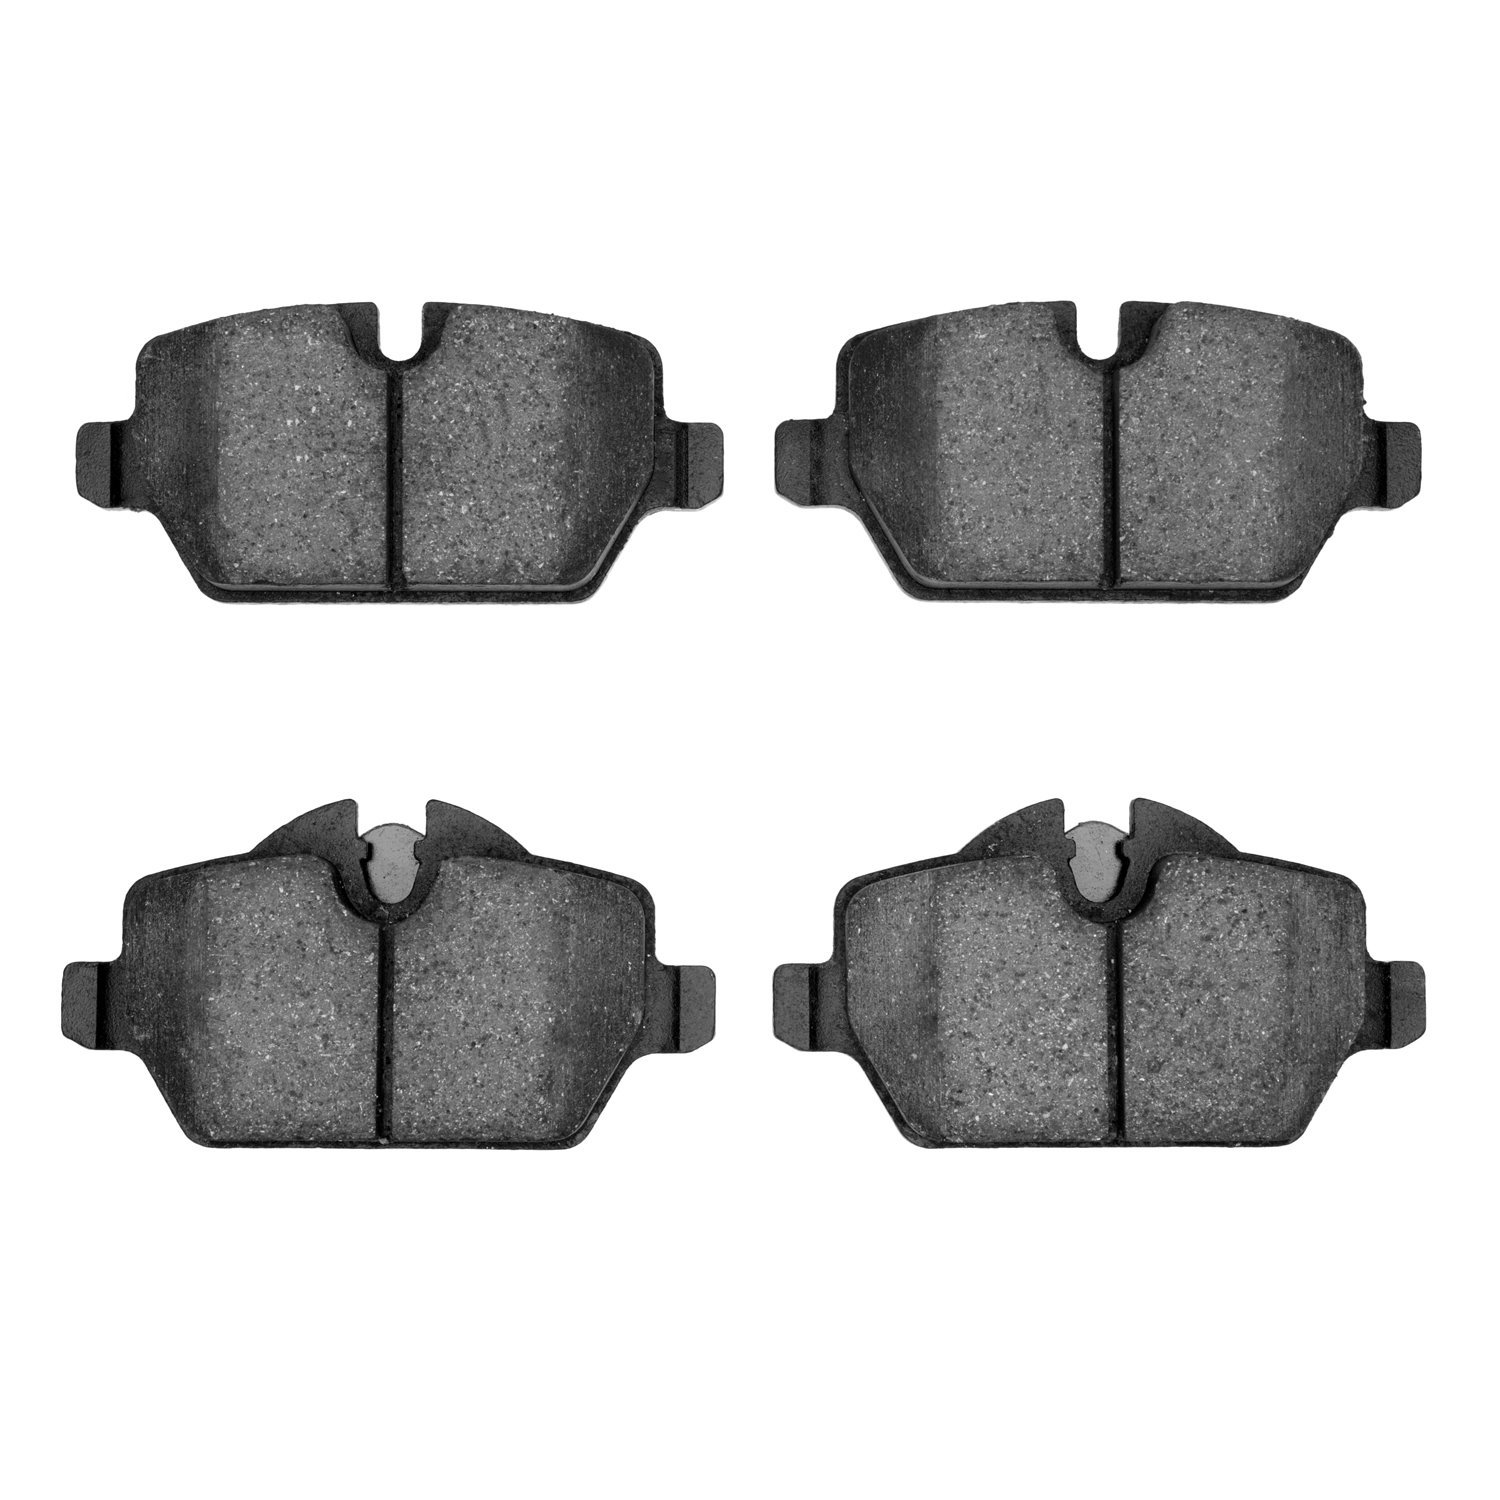 Ceramic Brake Pads, 2005-2016 Fits Multiple Makes/Models, Position: Rear